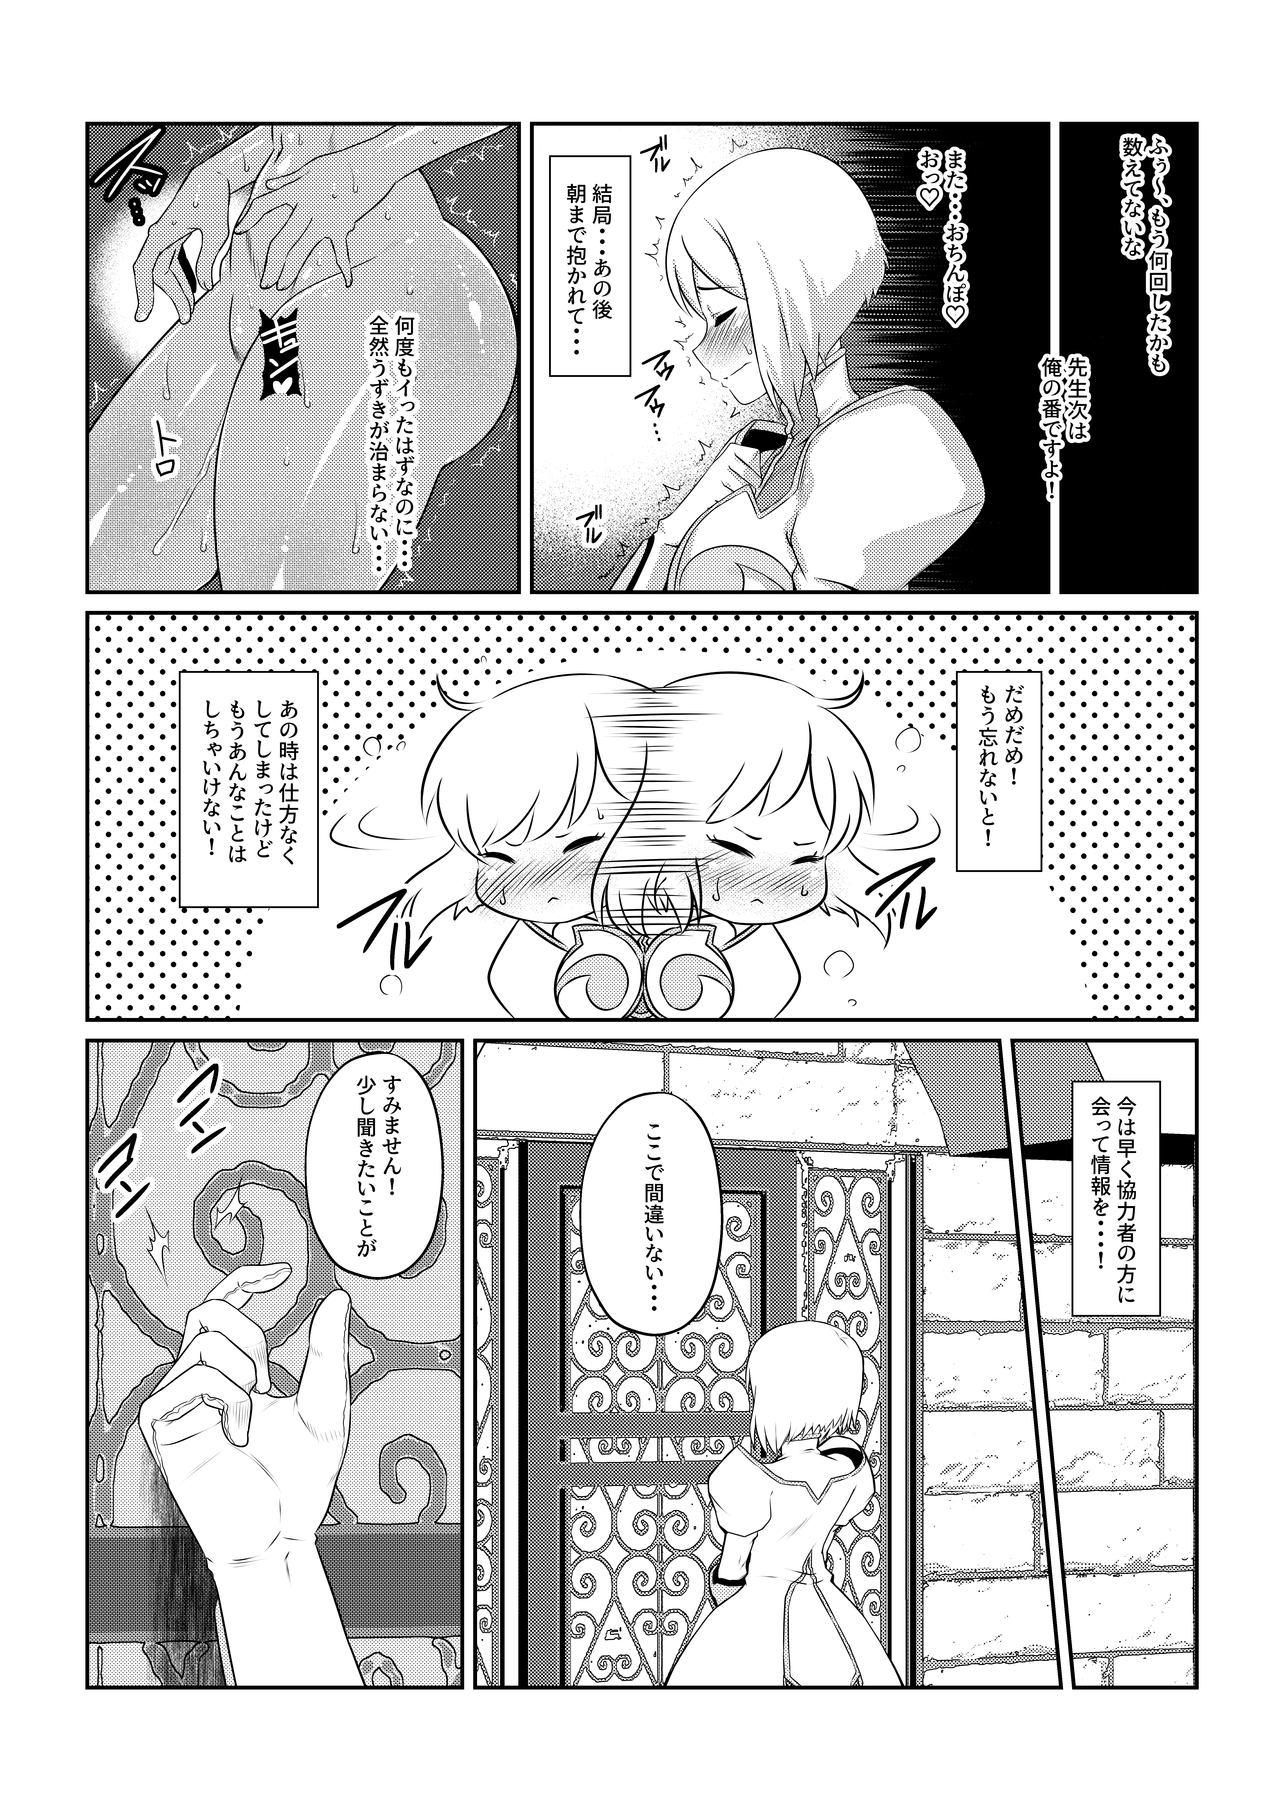 Hood Gekka Midarezaki - Tales of vesperia Gapes Gaping Asshole - Page 8